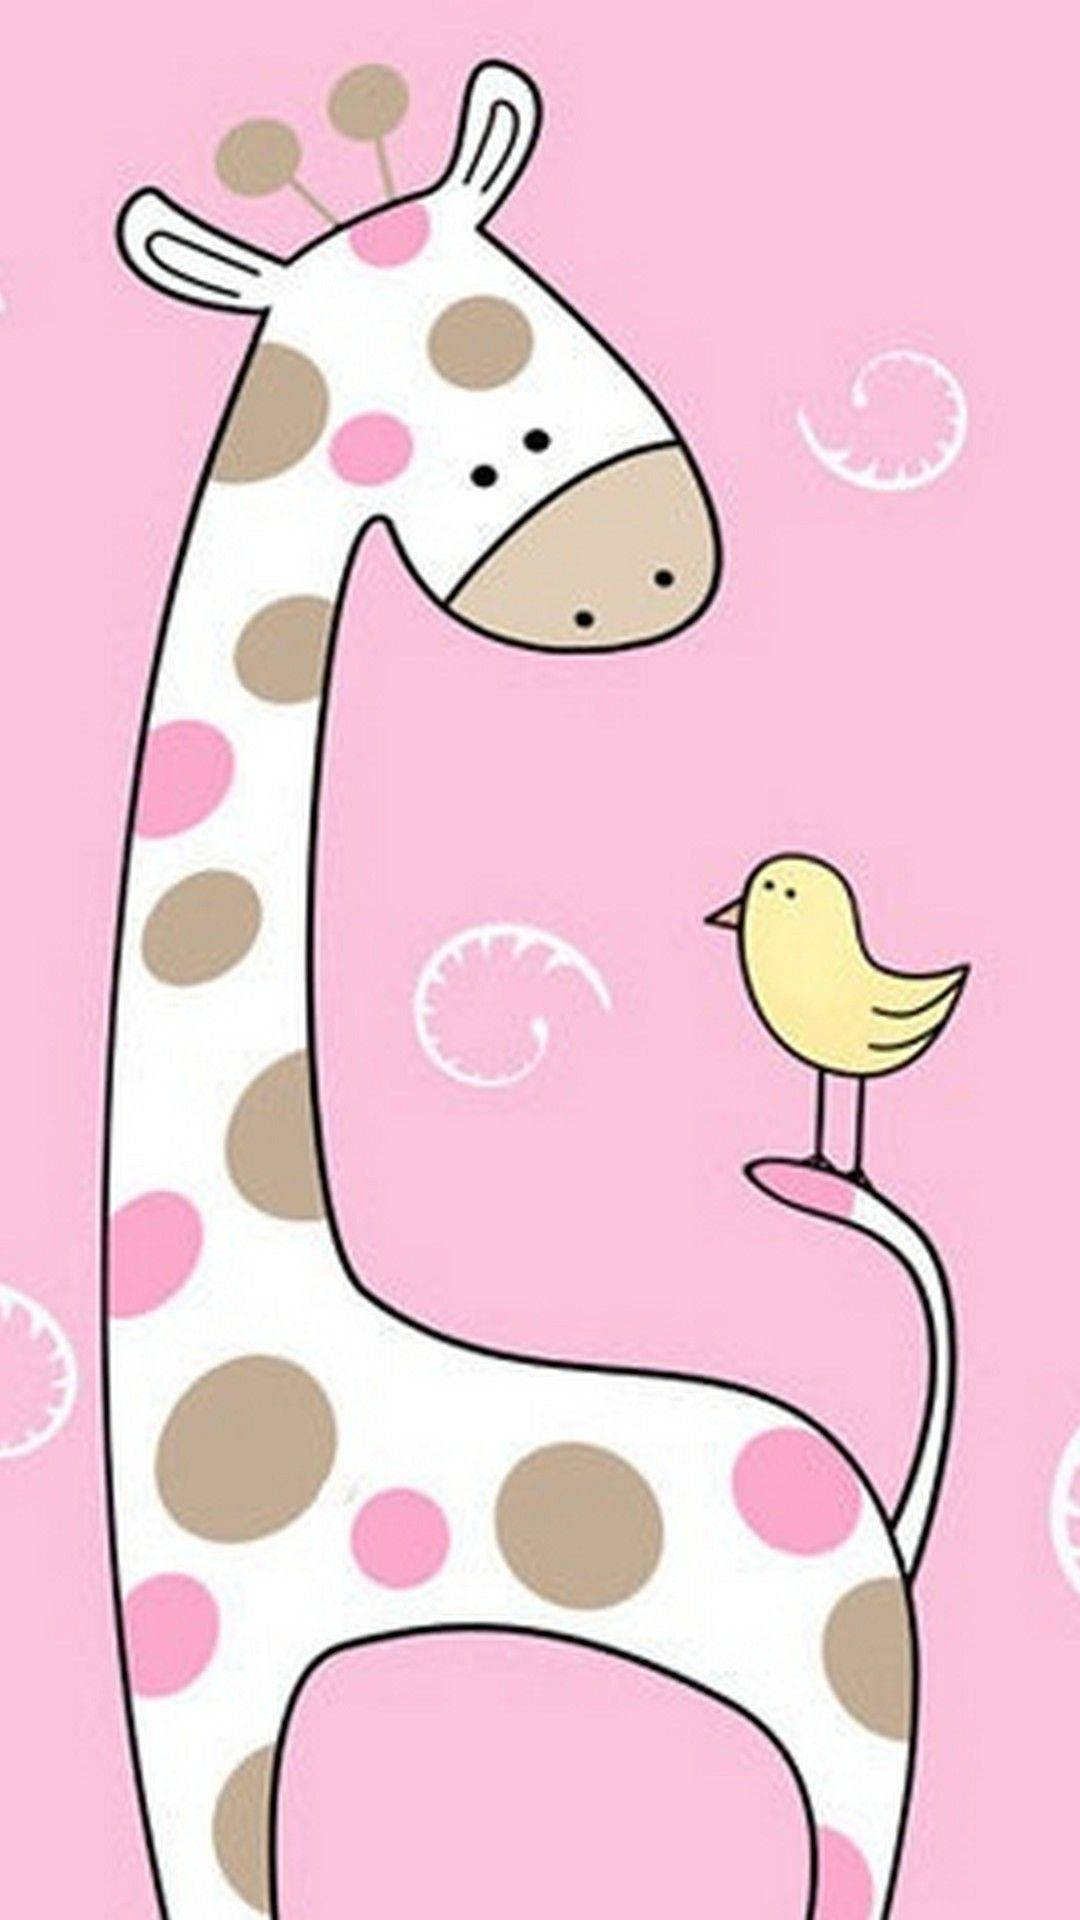 Giraffe And Chick Cute IPhone Wallpaper